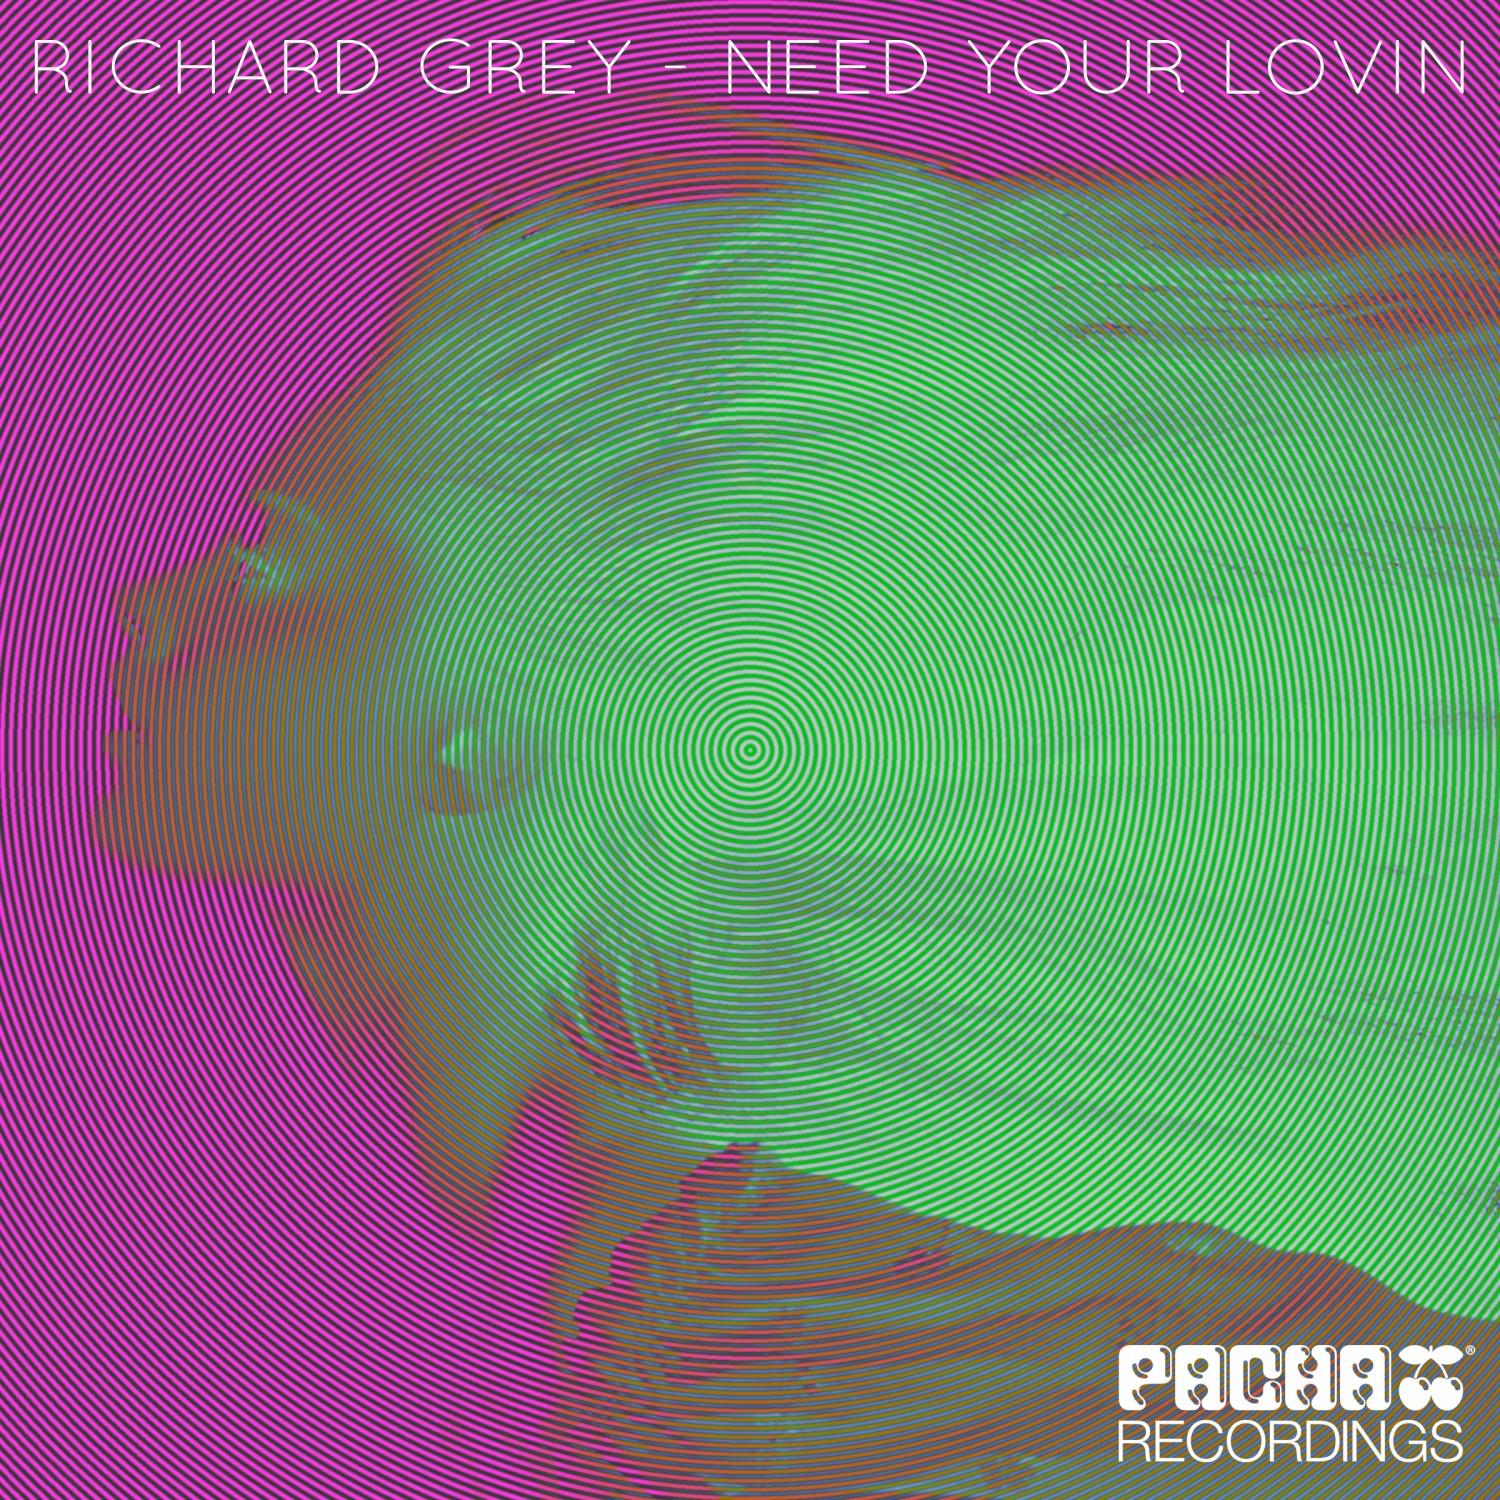 Need Your Lovin (Radio Edit)